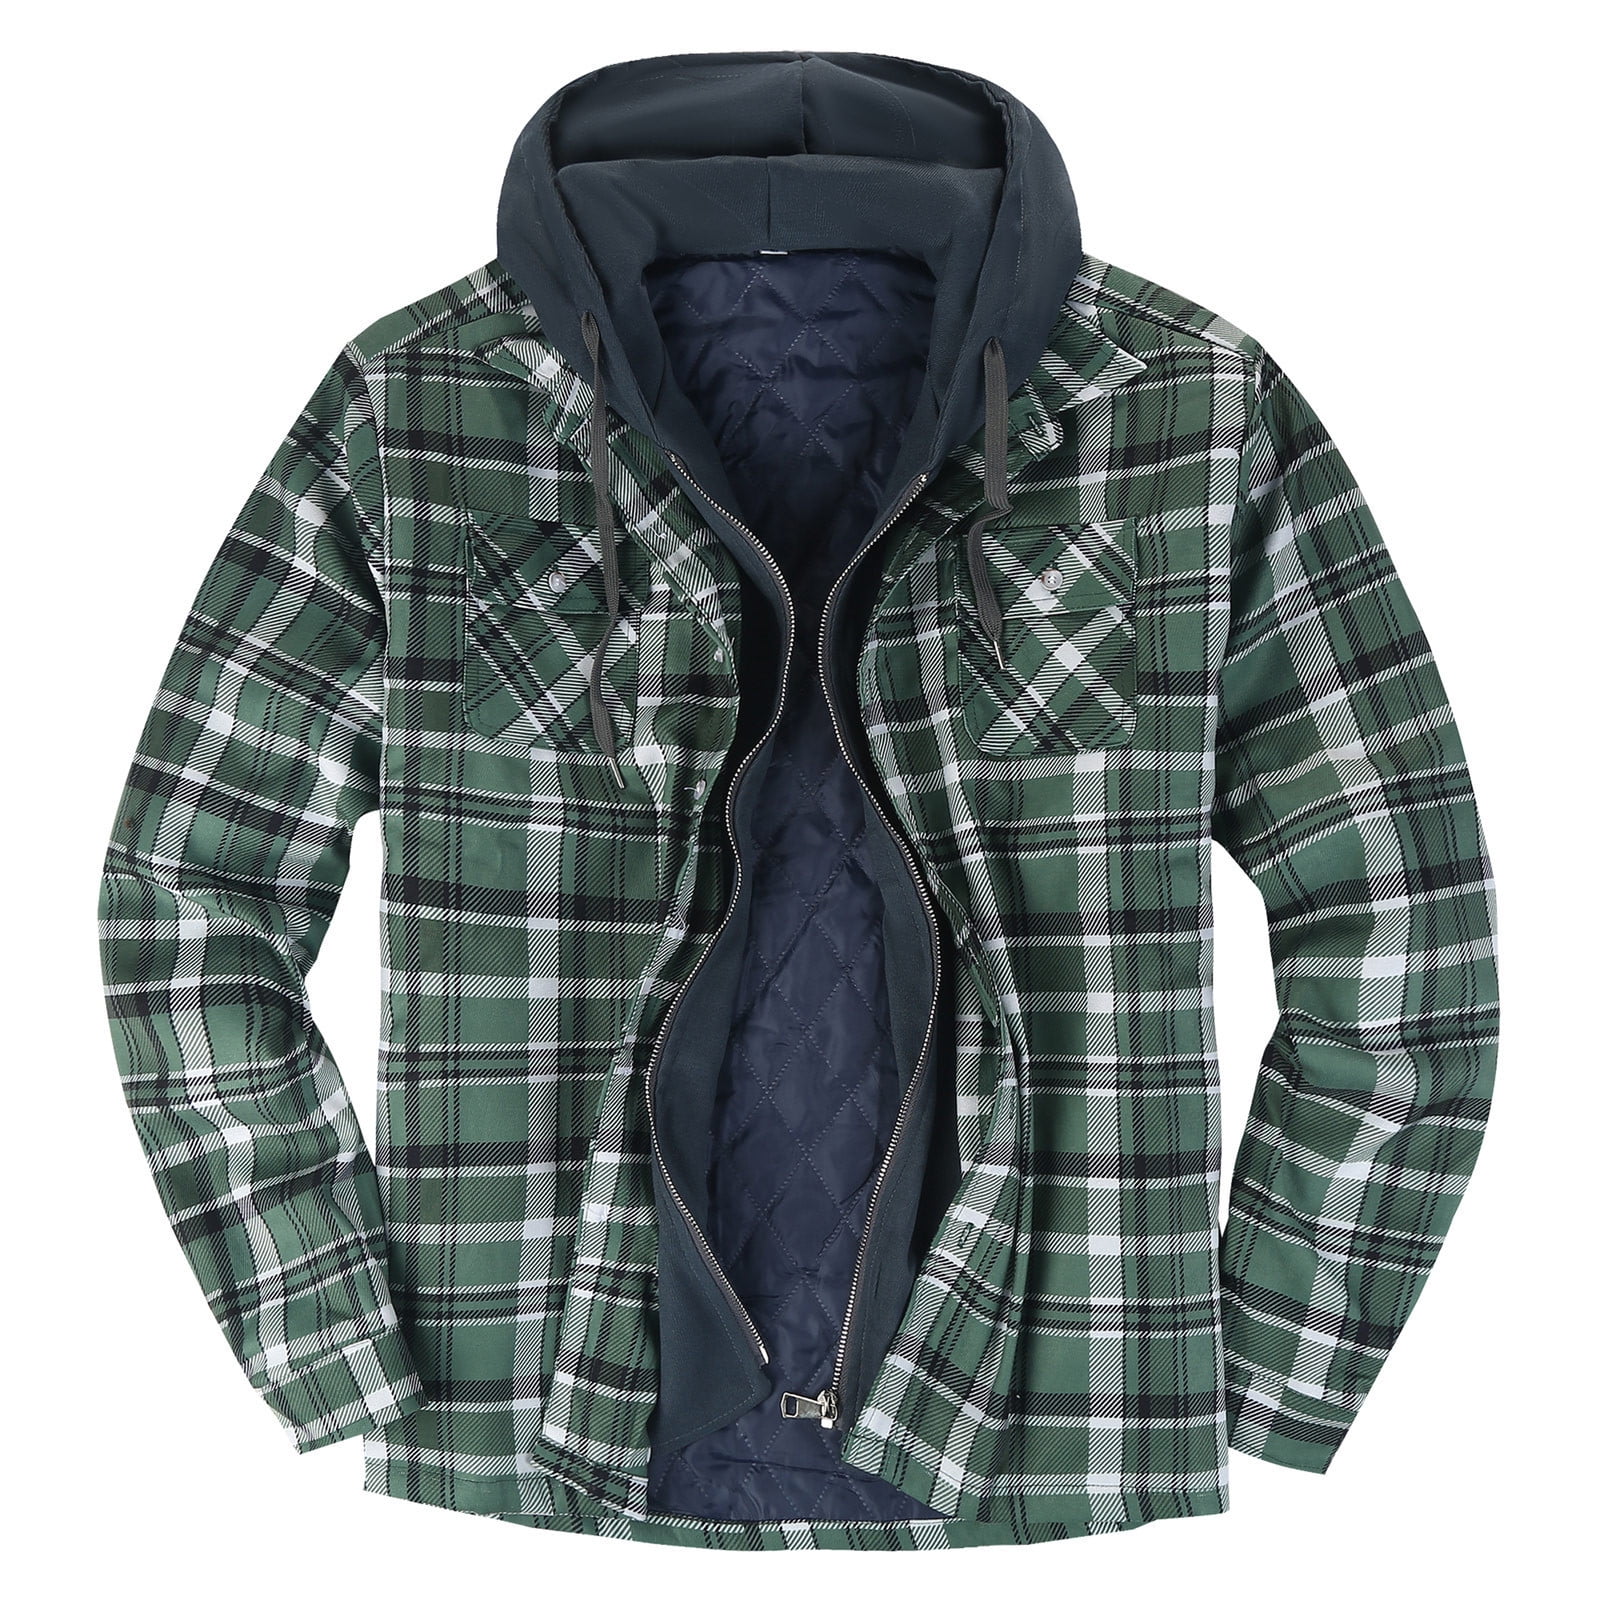 TQWQT Mens Plaid Shirts Jacket Fleece Lined Flannel Shirts Sherpa